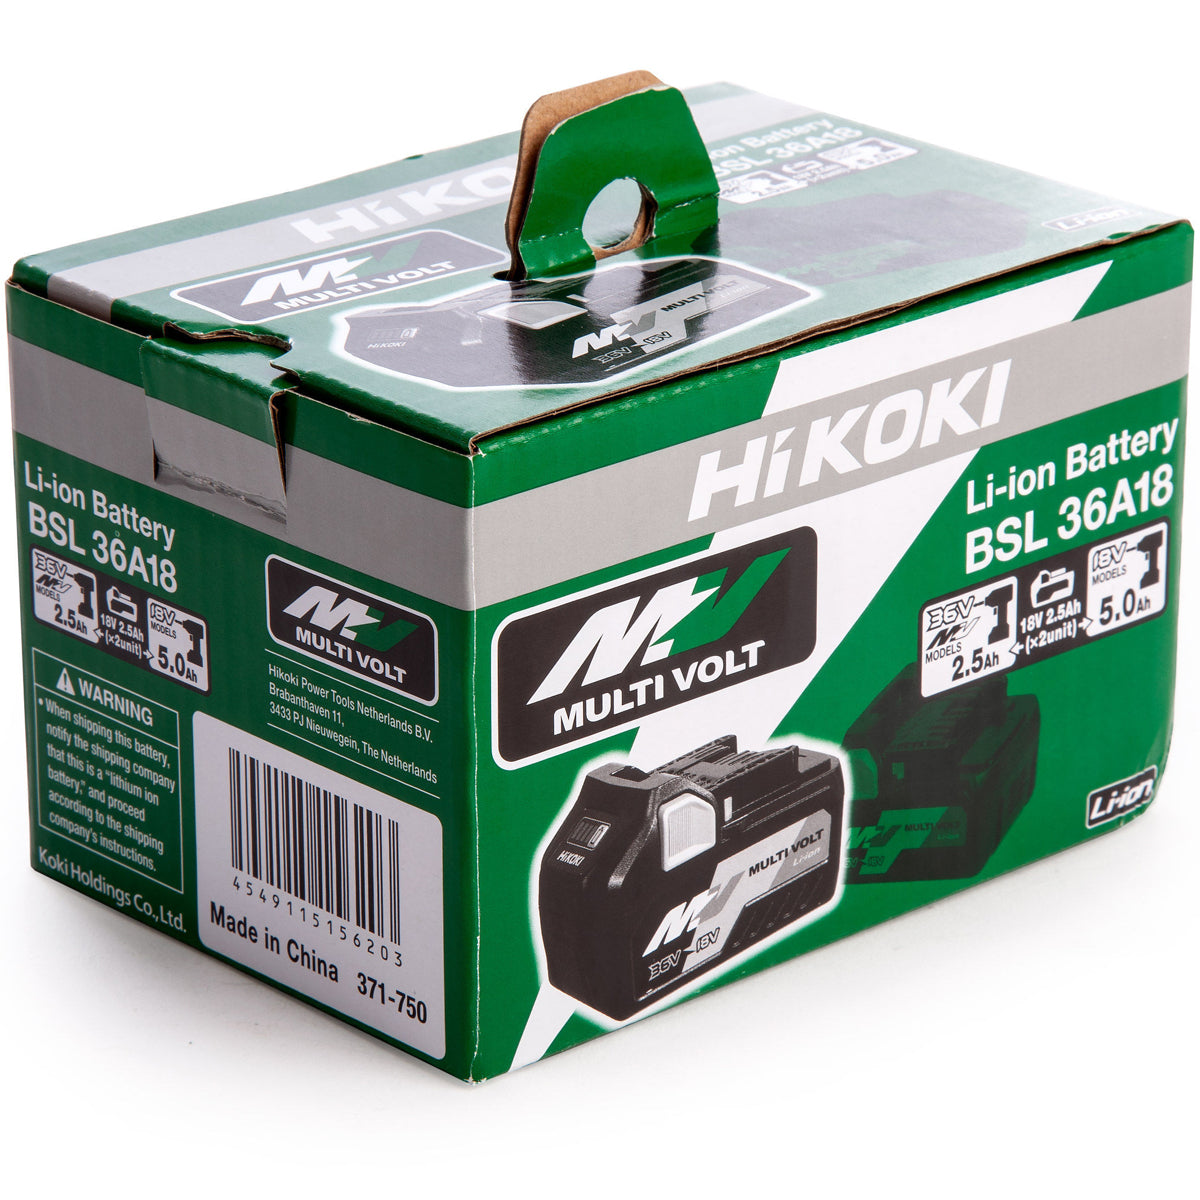 Hikoki BSL36A18 18V/36V Li-ion 2.5Ah/5.0Ah Multi Voltage Battery